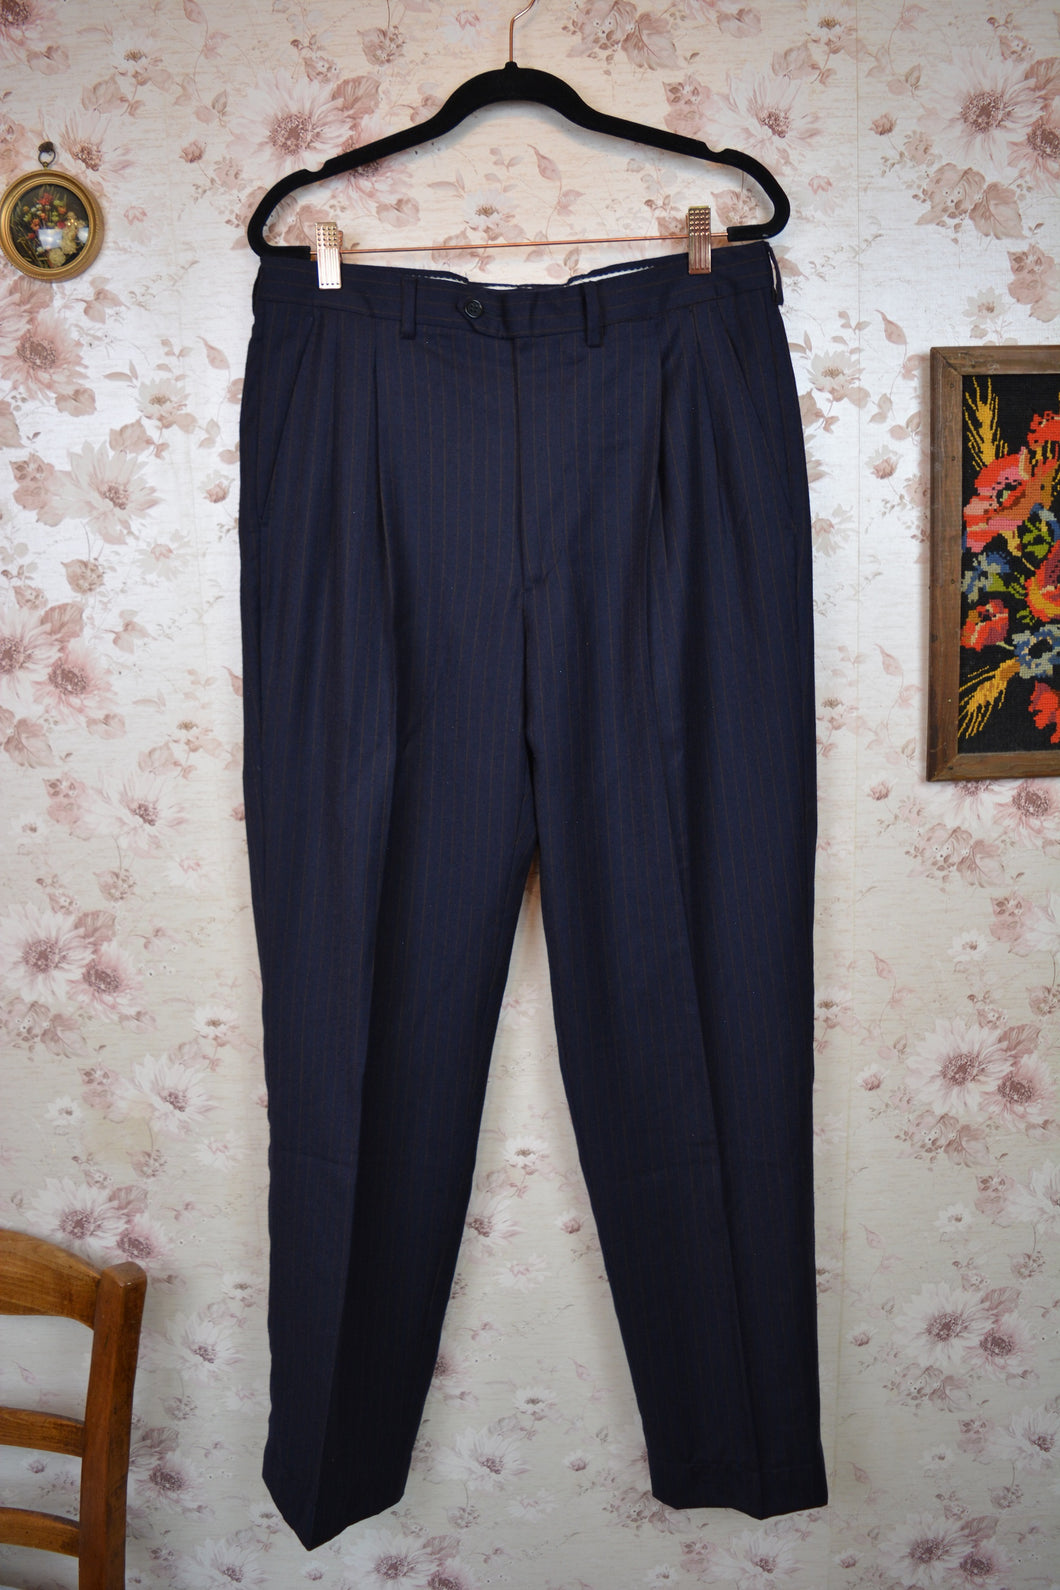 Pantalon à pince bleu marine rayé T.48 (M)